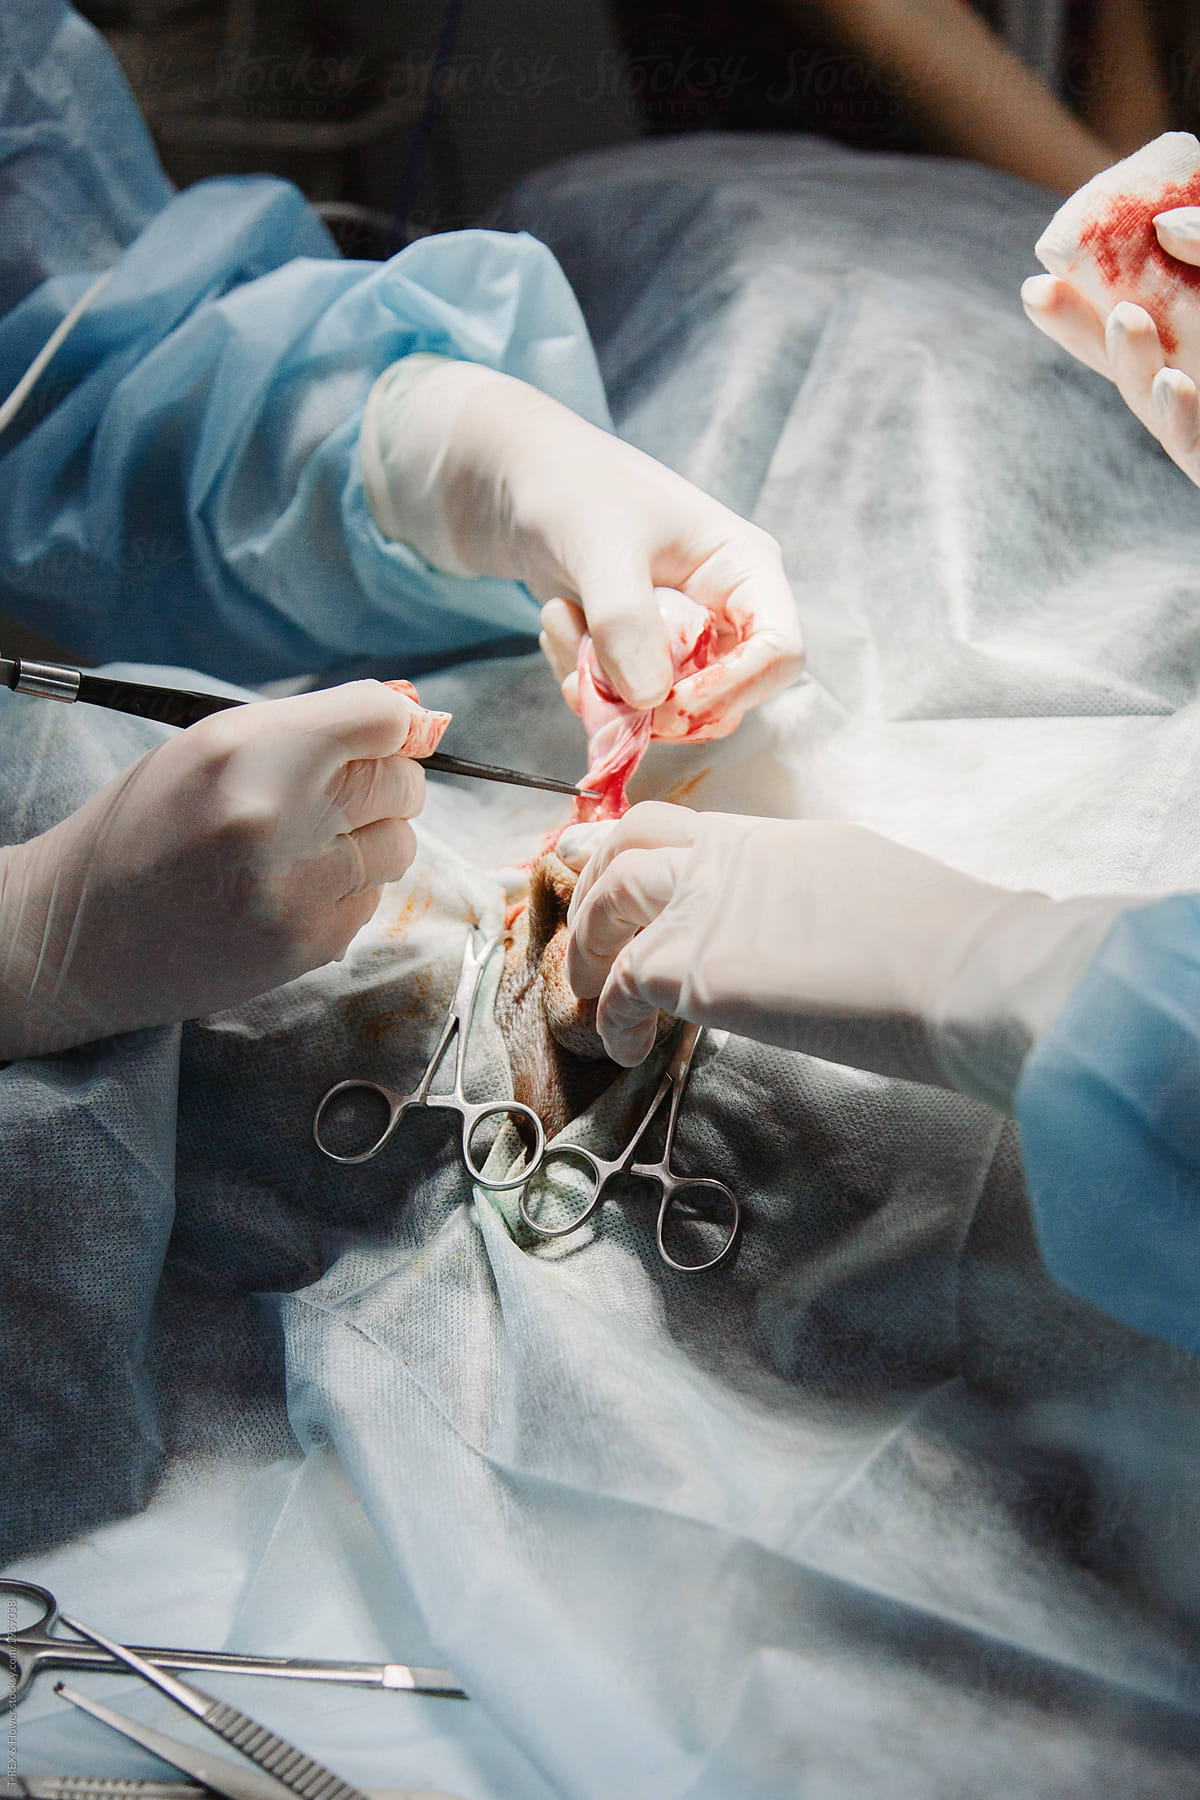 Crop surgeons cutting animal in vet clinic